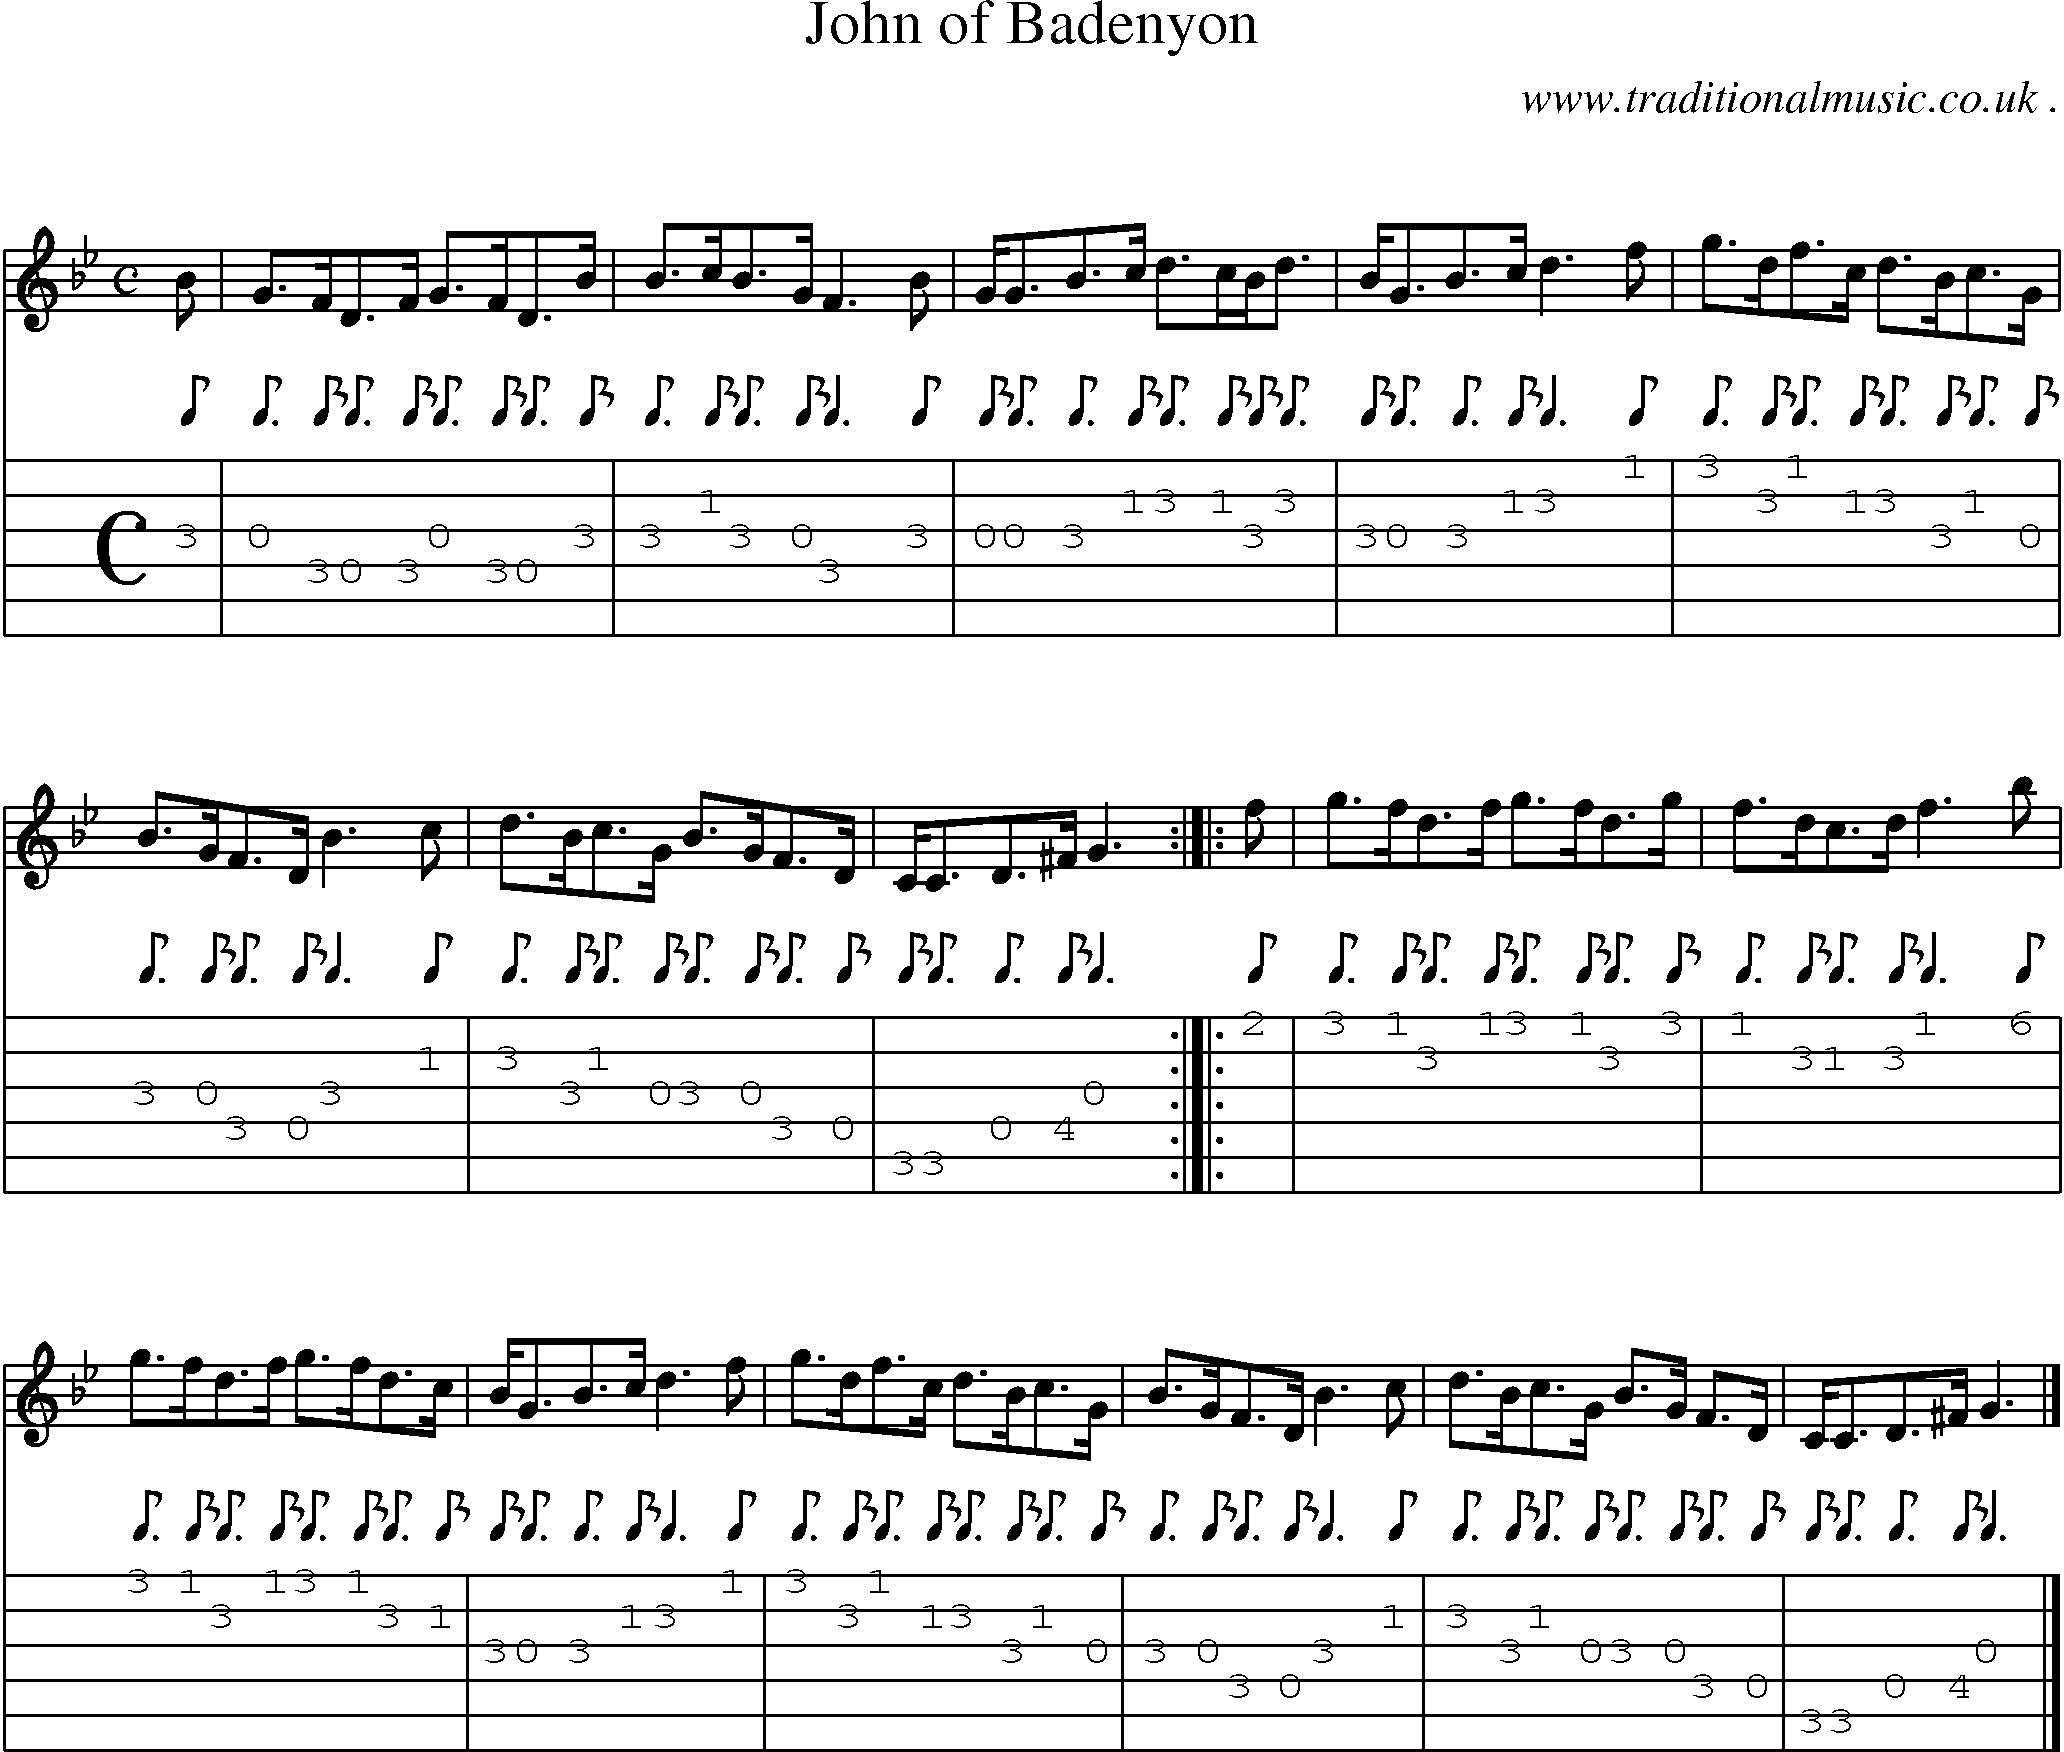 Sheet-music  score, Chords and Guitar Tabs for John Of Badenyon